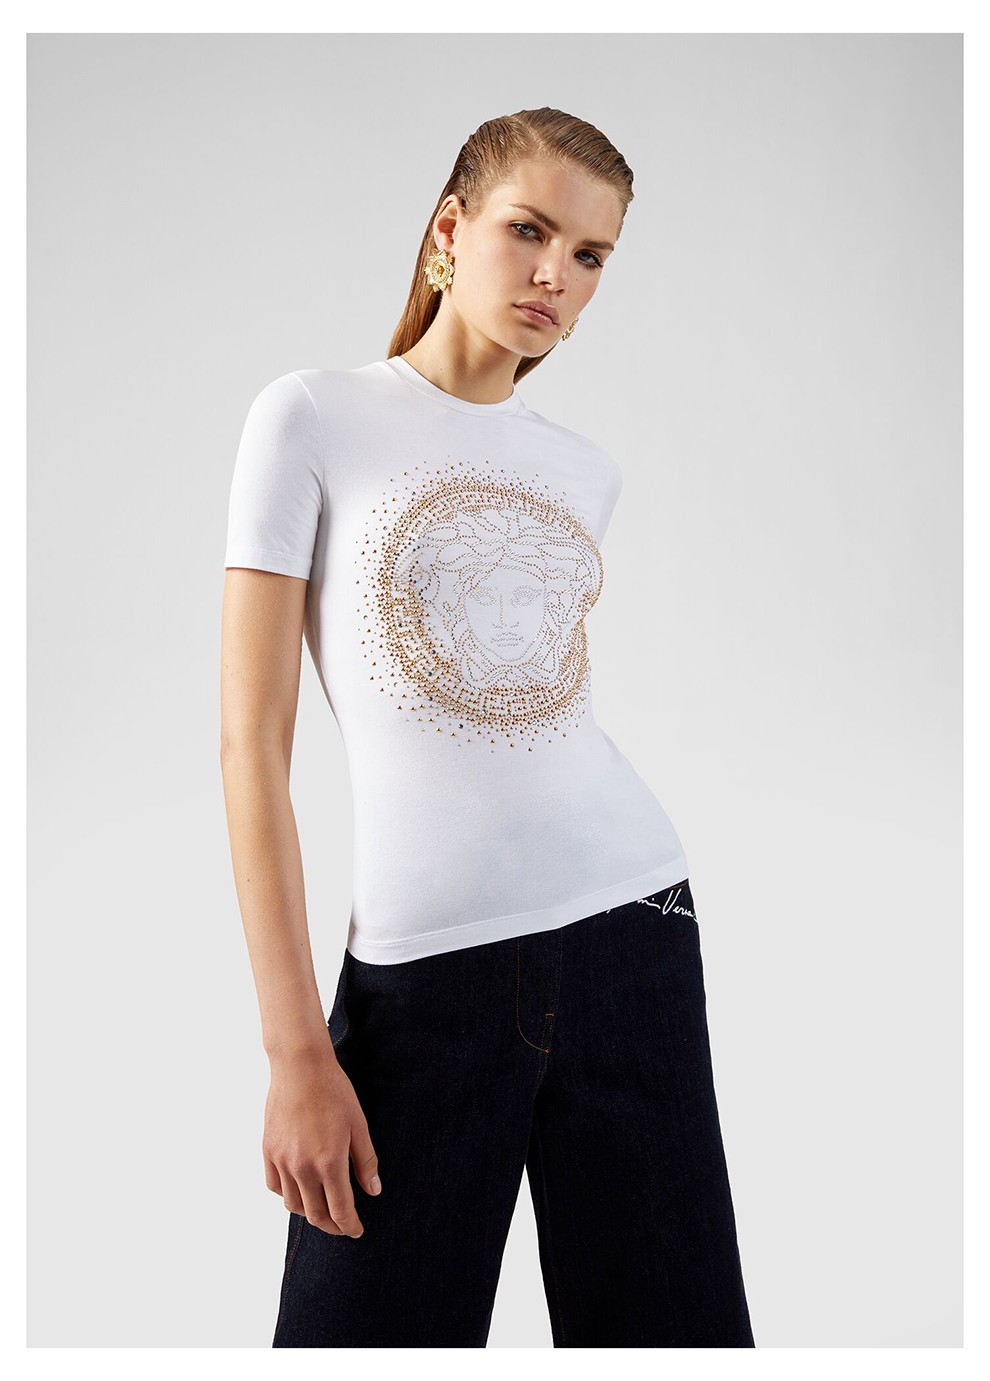 versace范思哲新款女士棉质美杜莎头像珠饰图案时尚短袖t恤衫a82241a